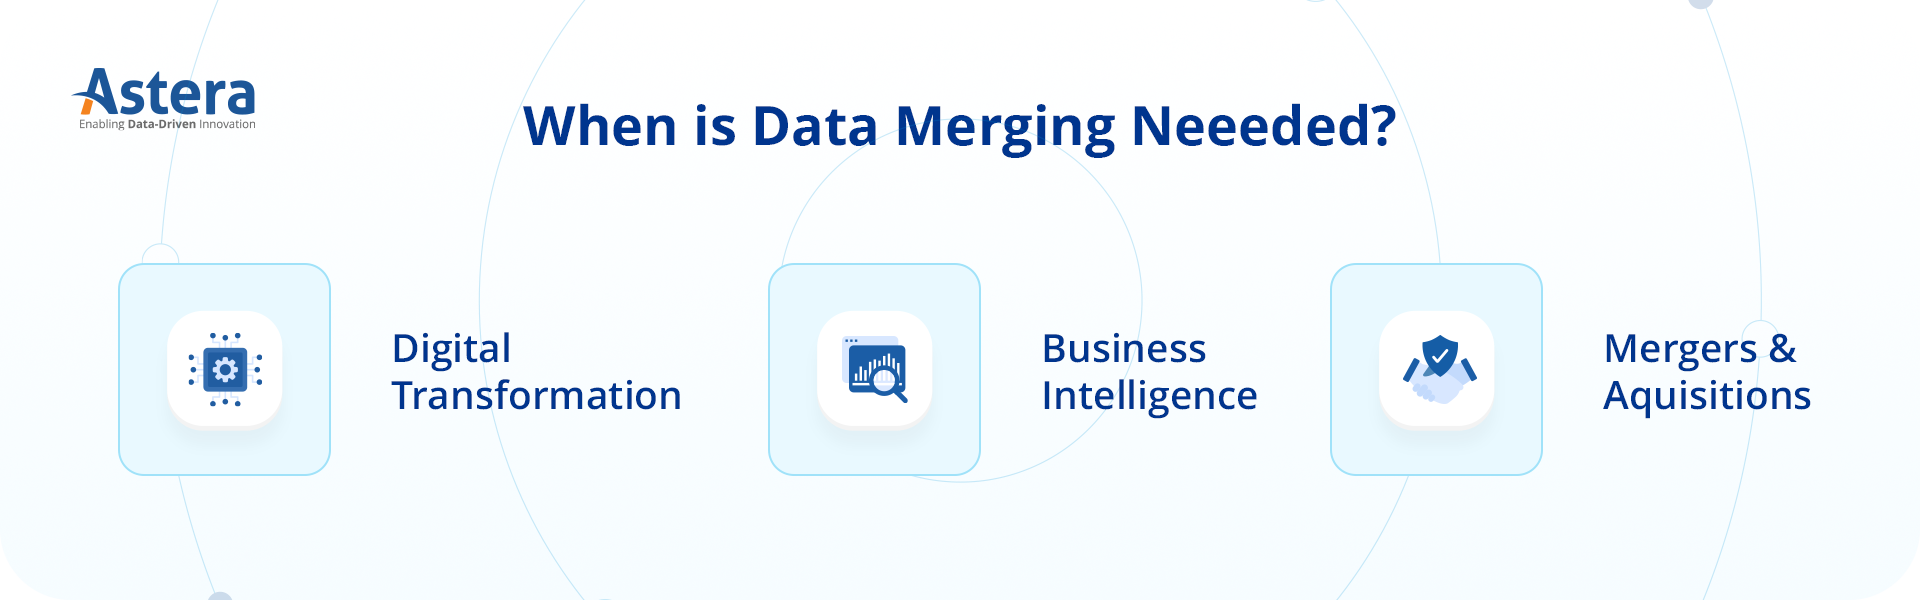 When is data merging needed